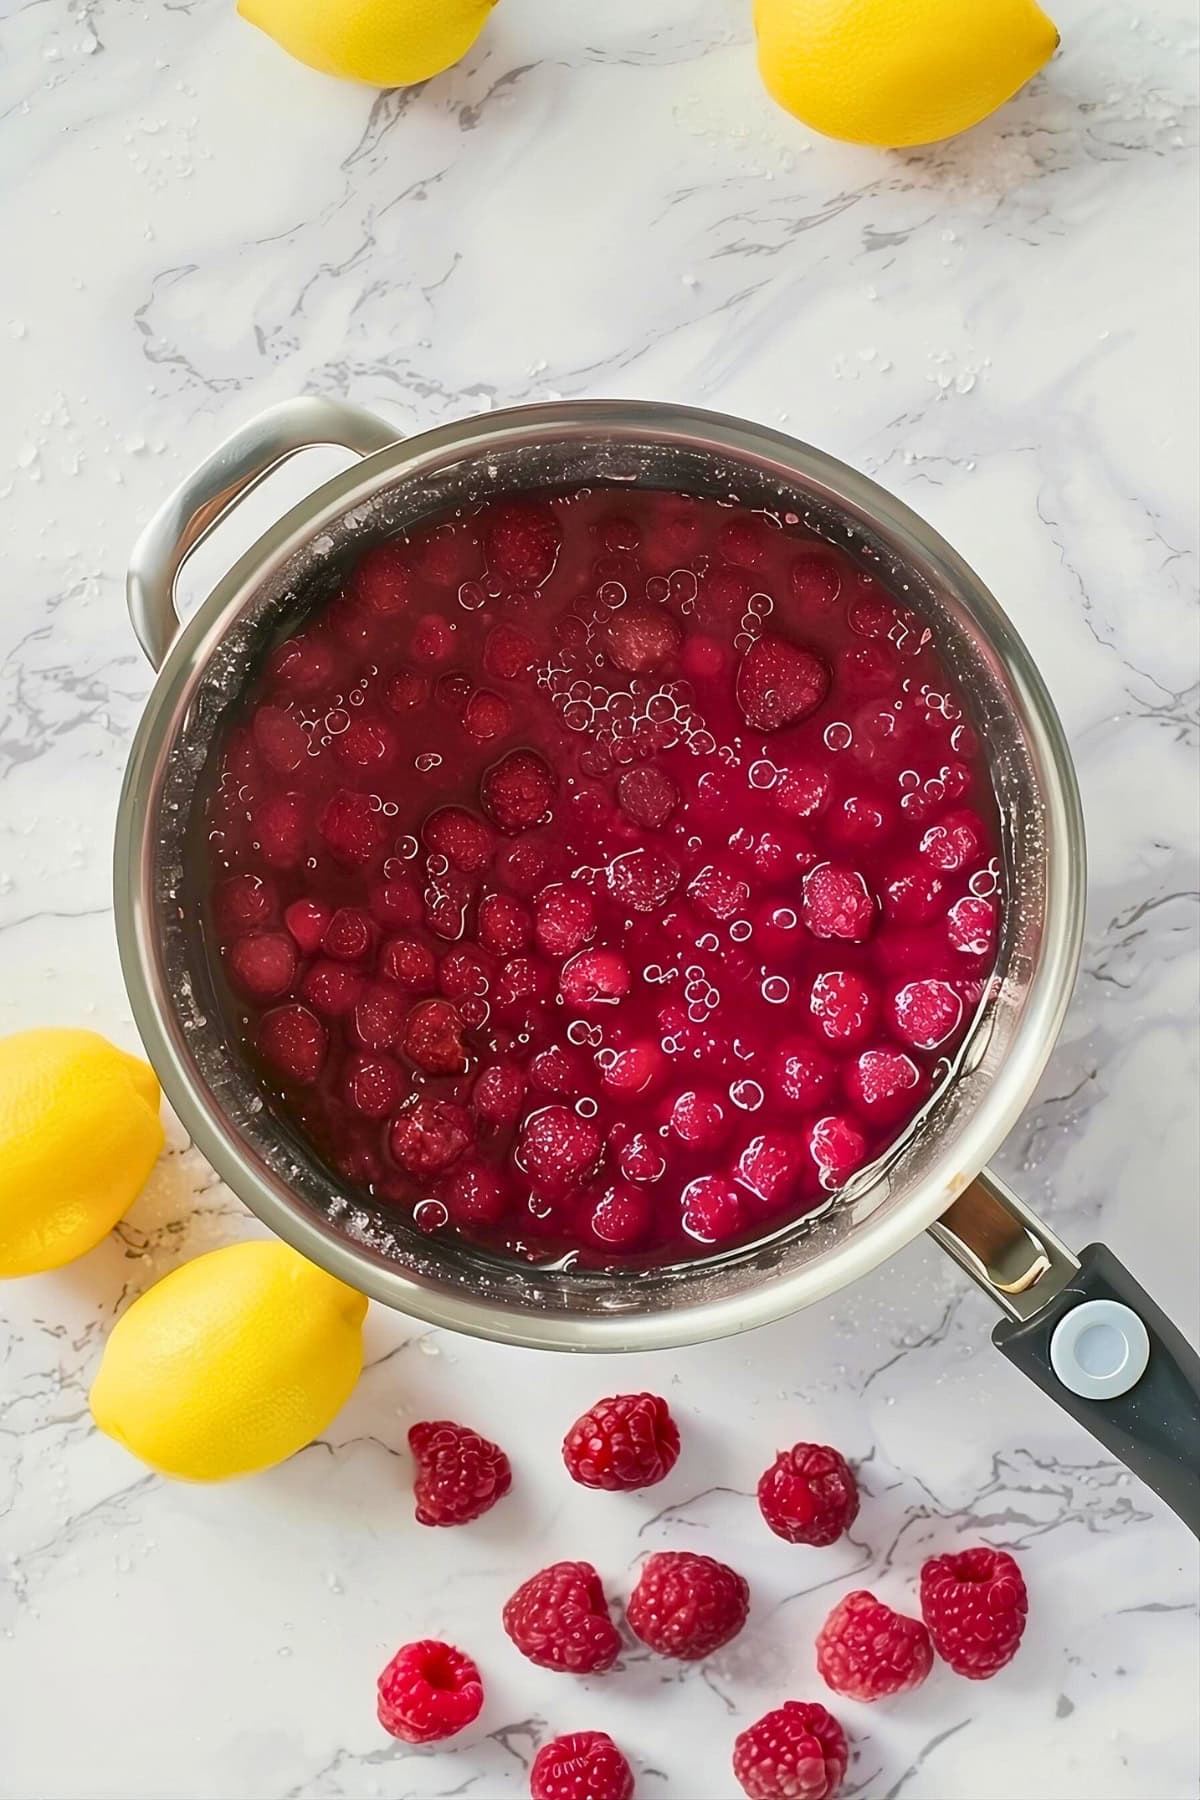 Raspberries puree in a sauce pan.